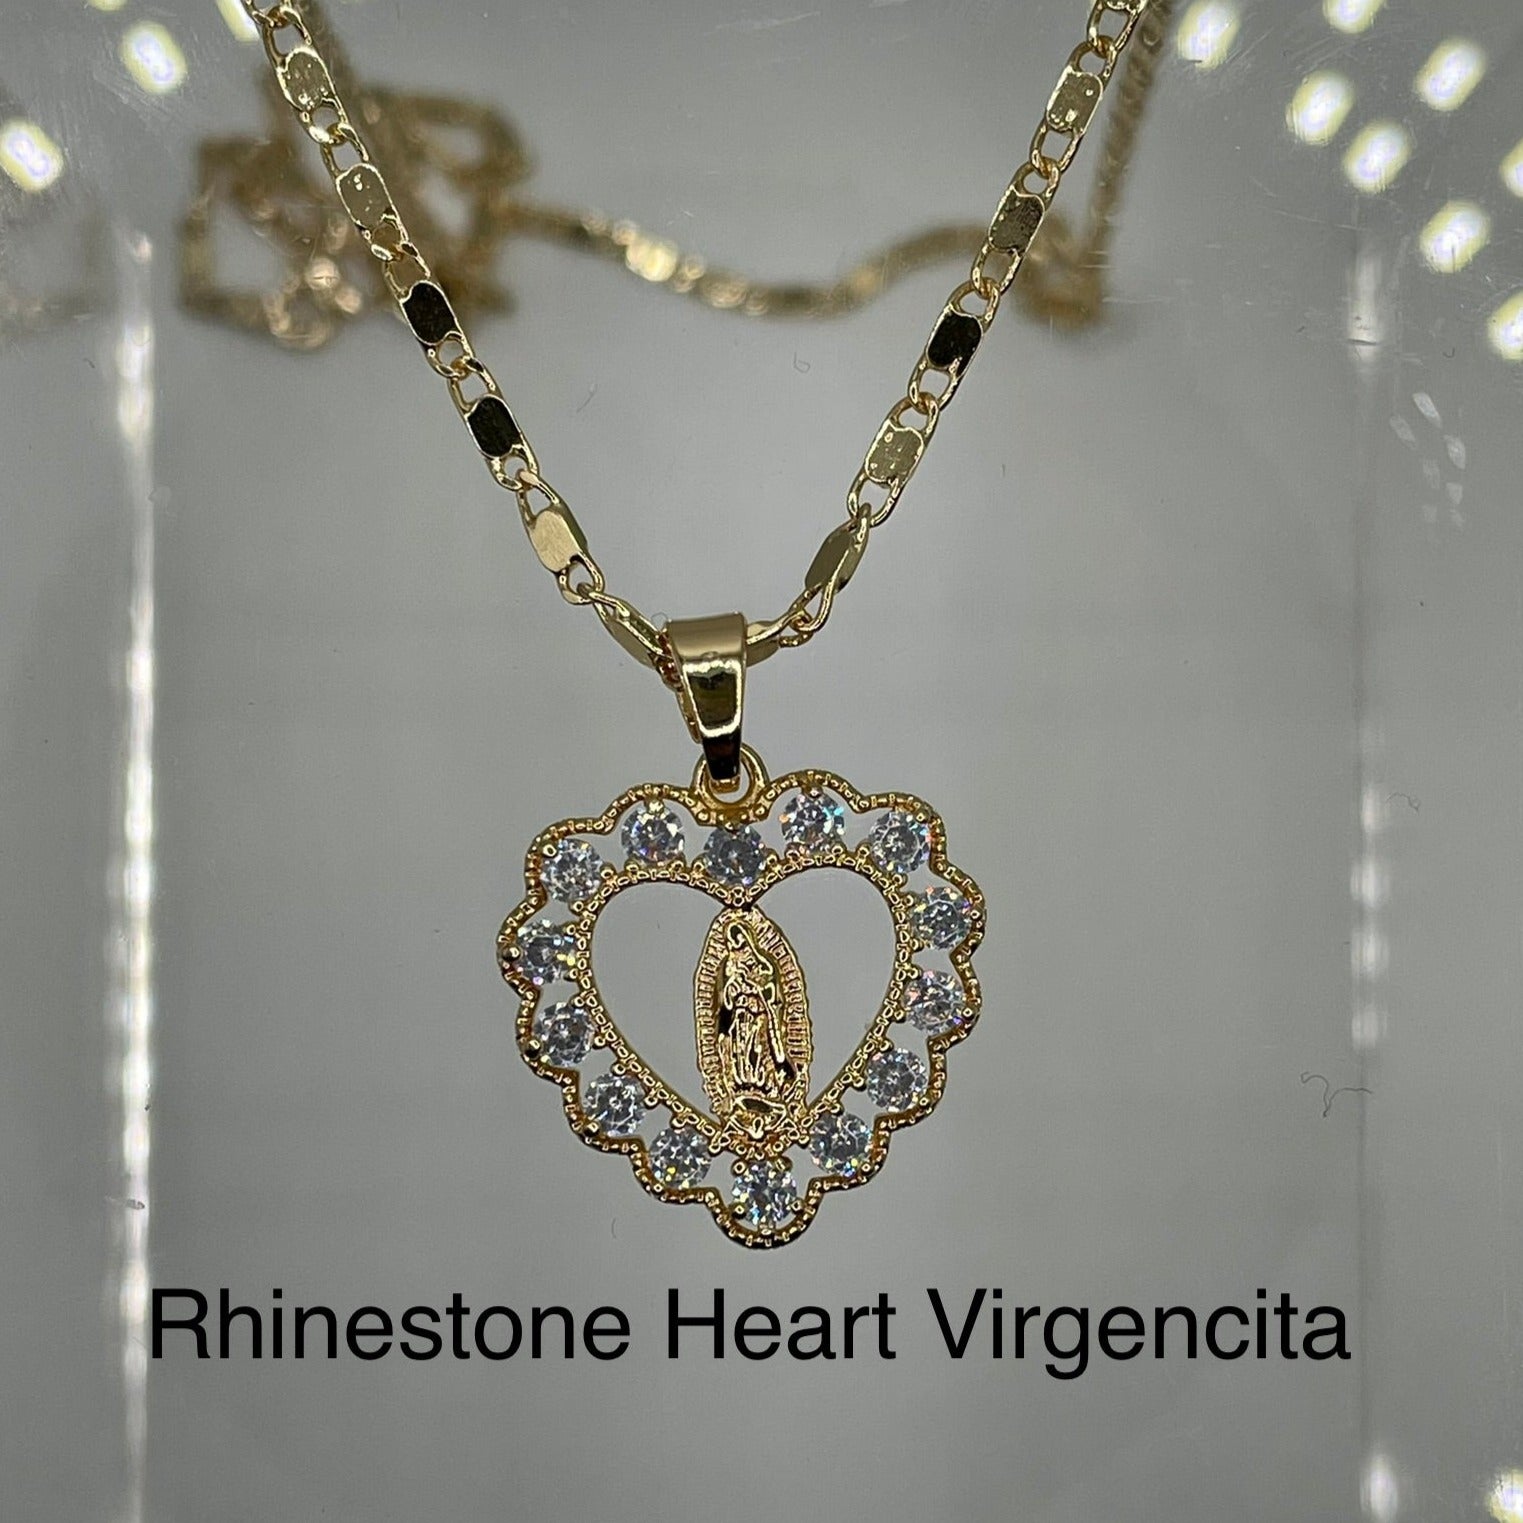 Tree in heart gold pendant. Gold pendant. Heart pendant.